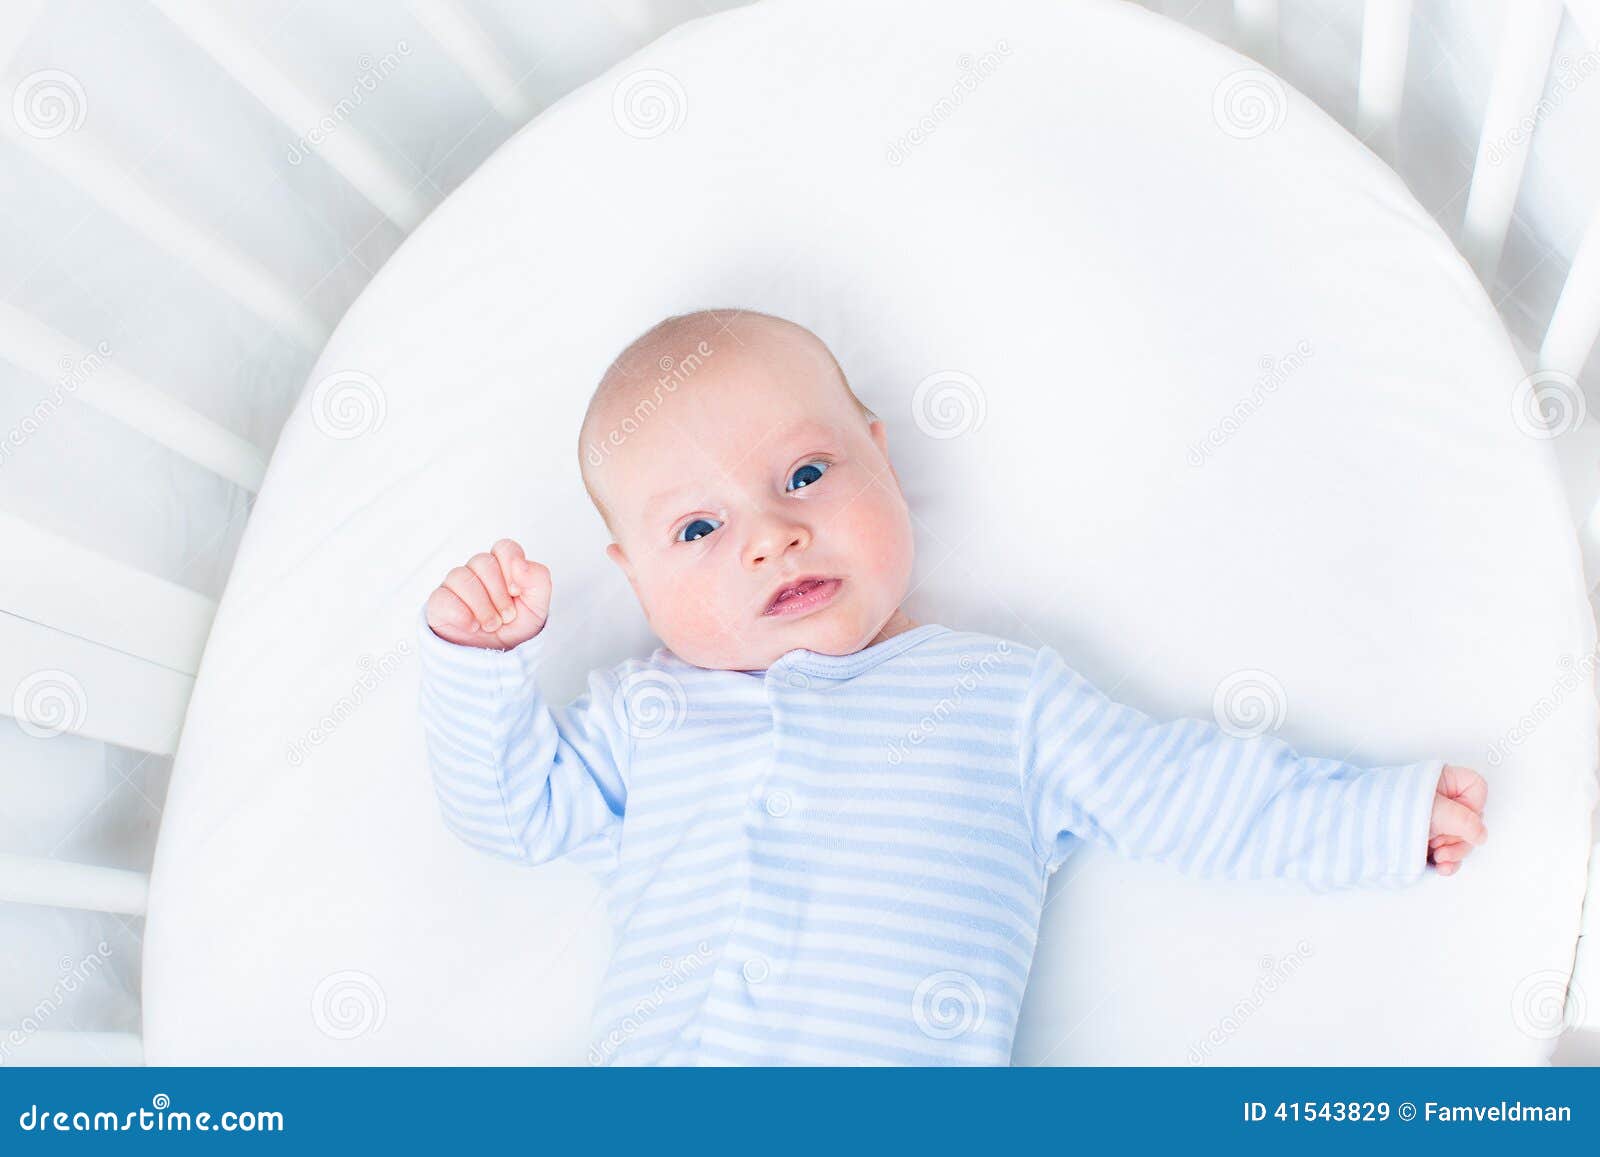 Cute Newborn Baby Boy In A White Round Crib Stock Image 